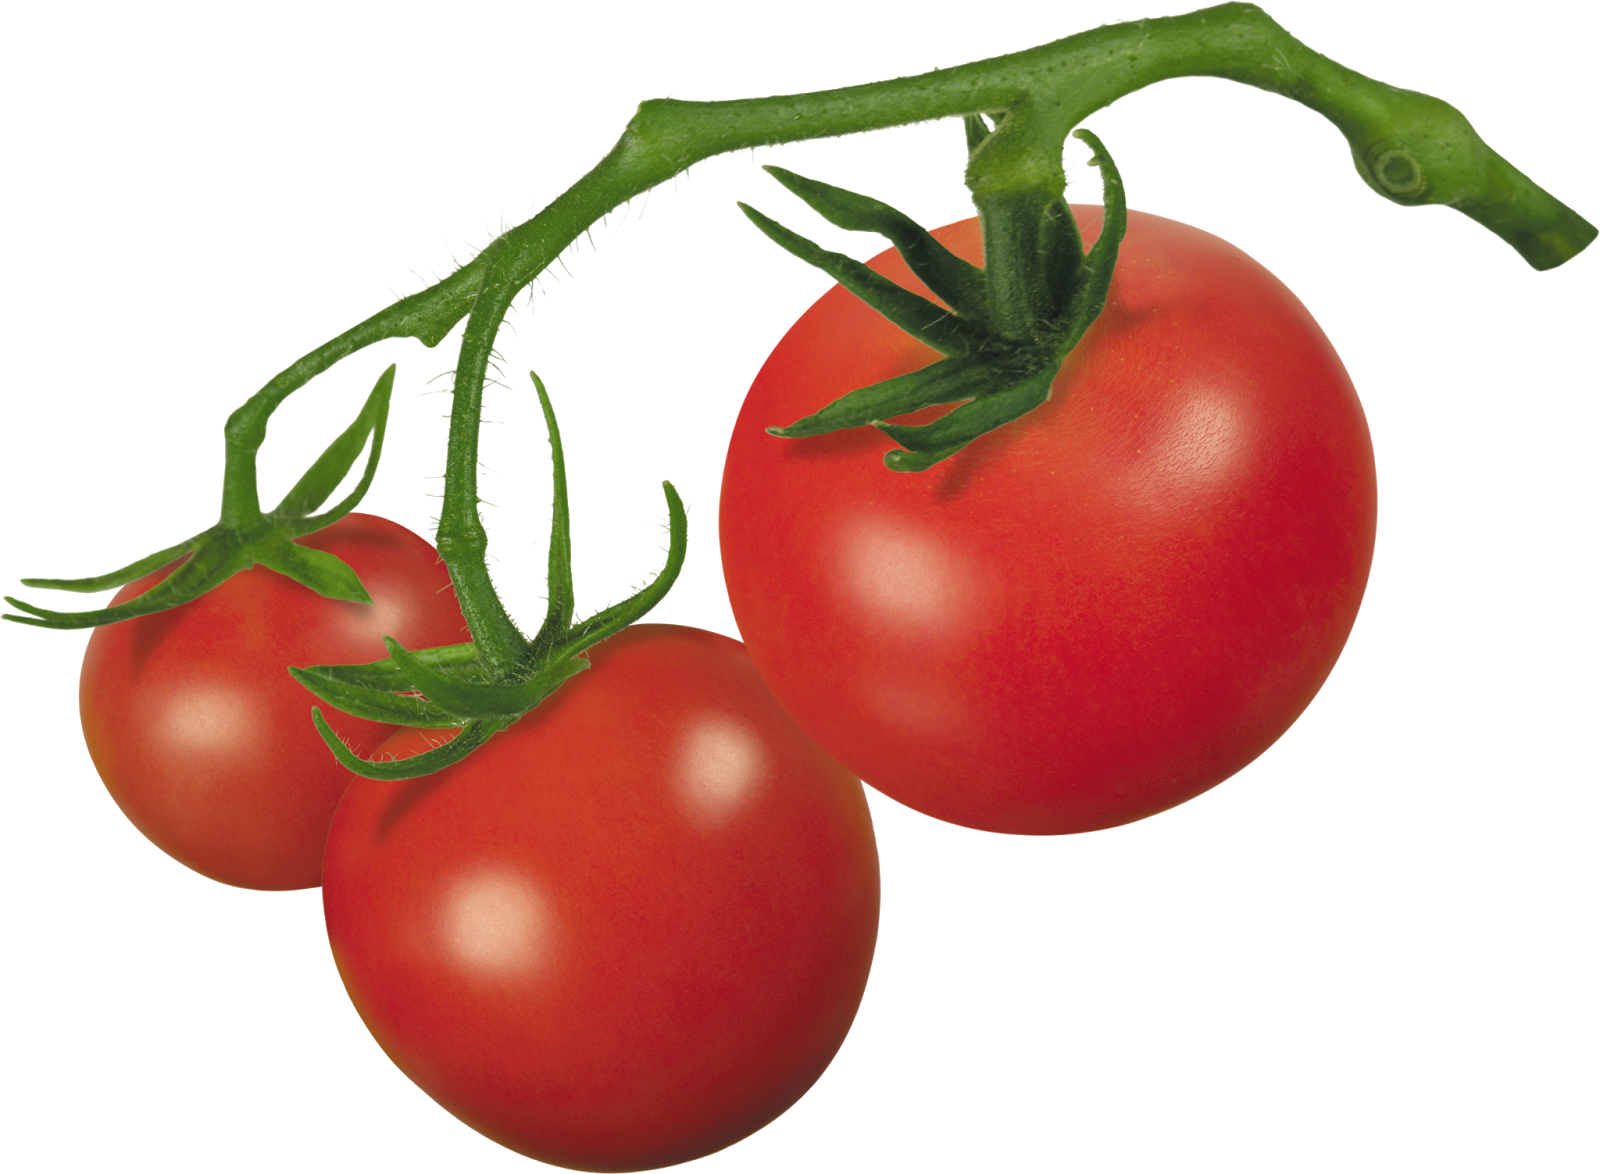 tomatoes clipart small tomato